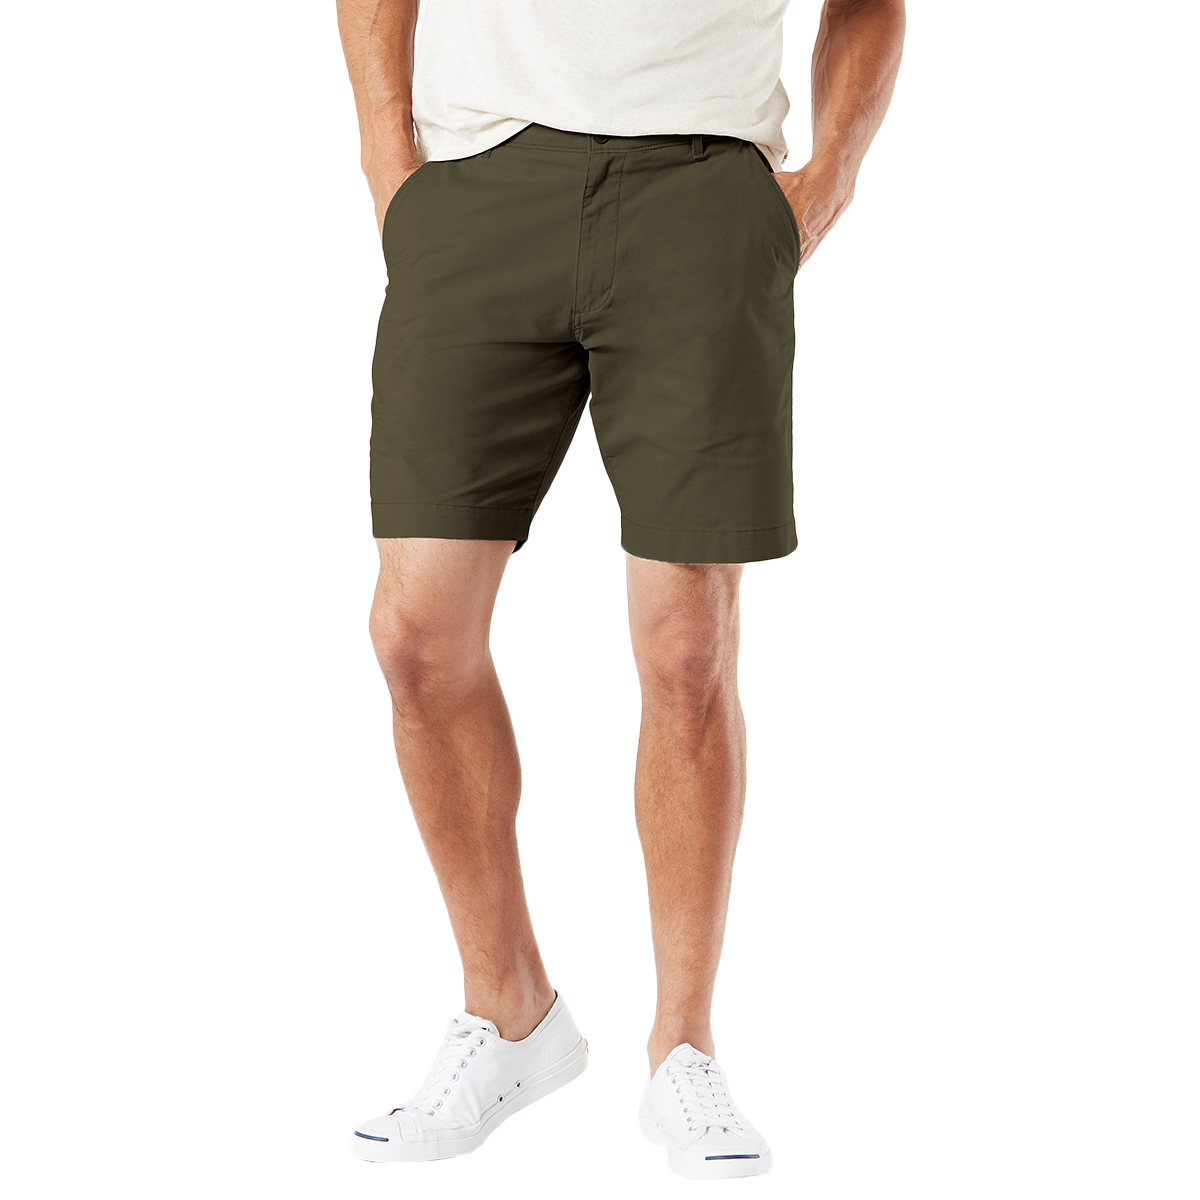 Dockers Men's Duraflex Lite Straight-Fit Shorts - Green, 40